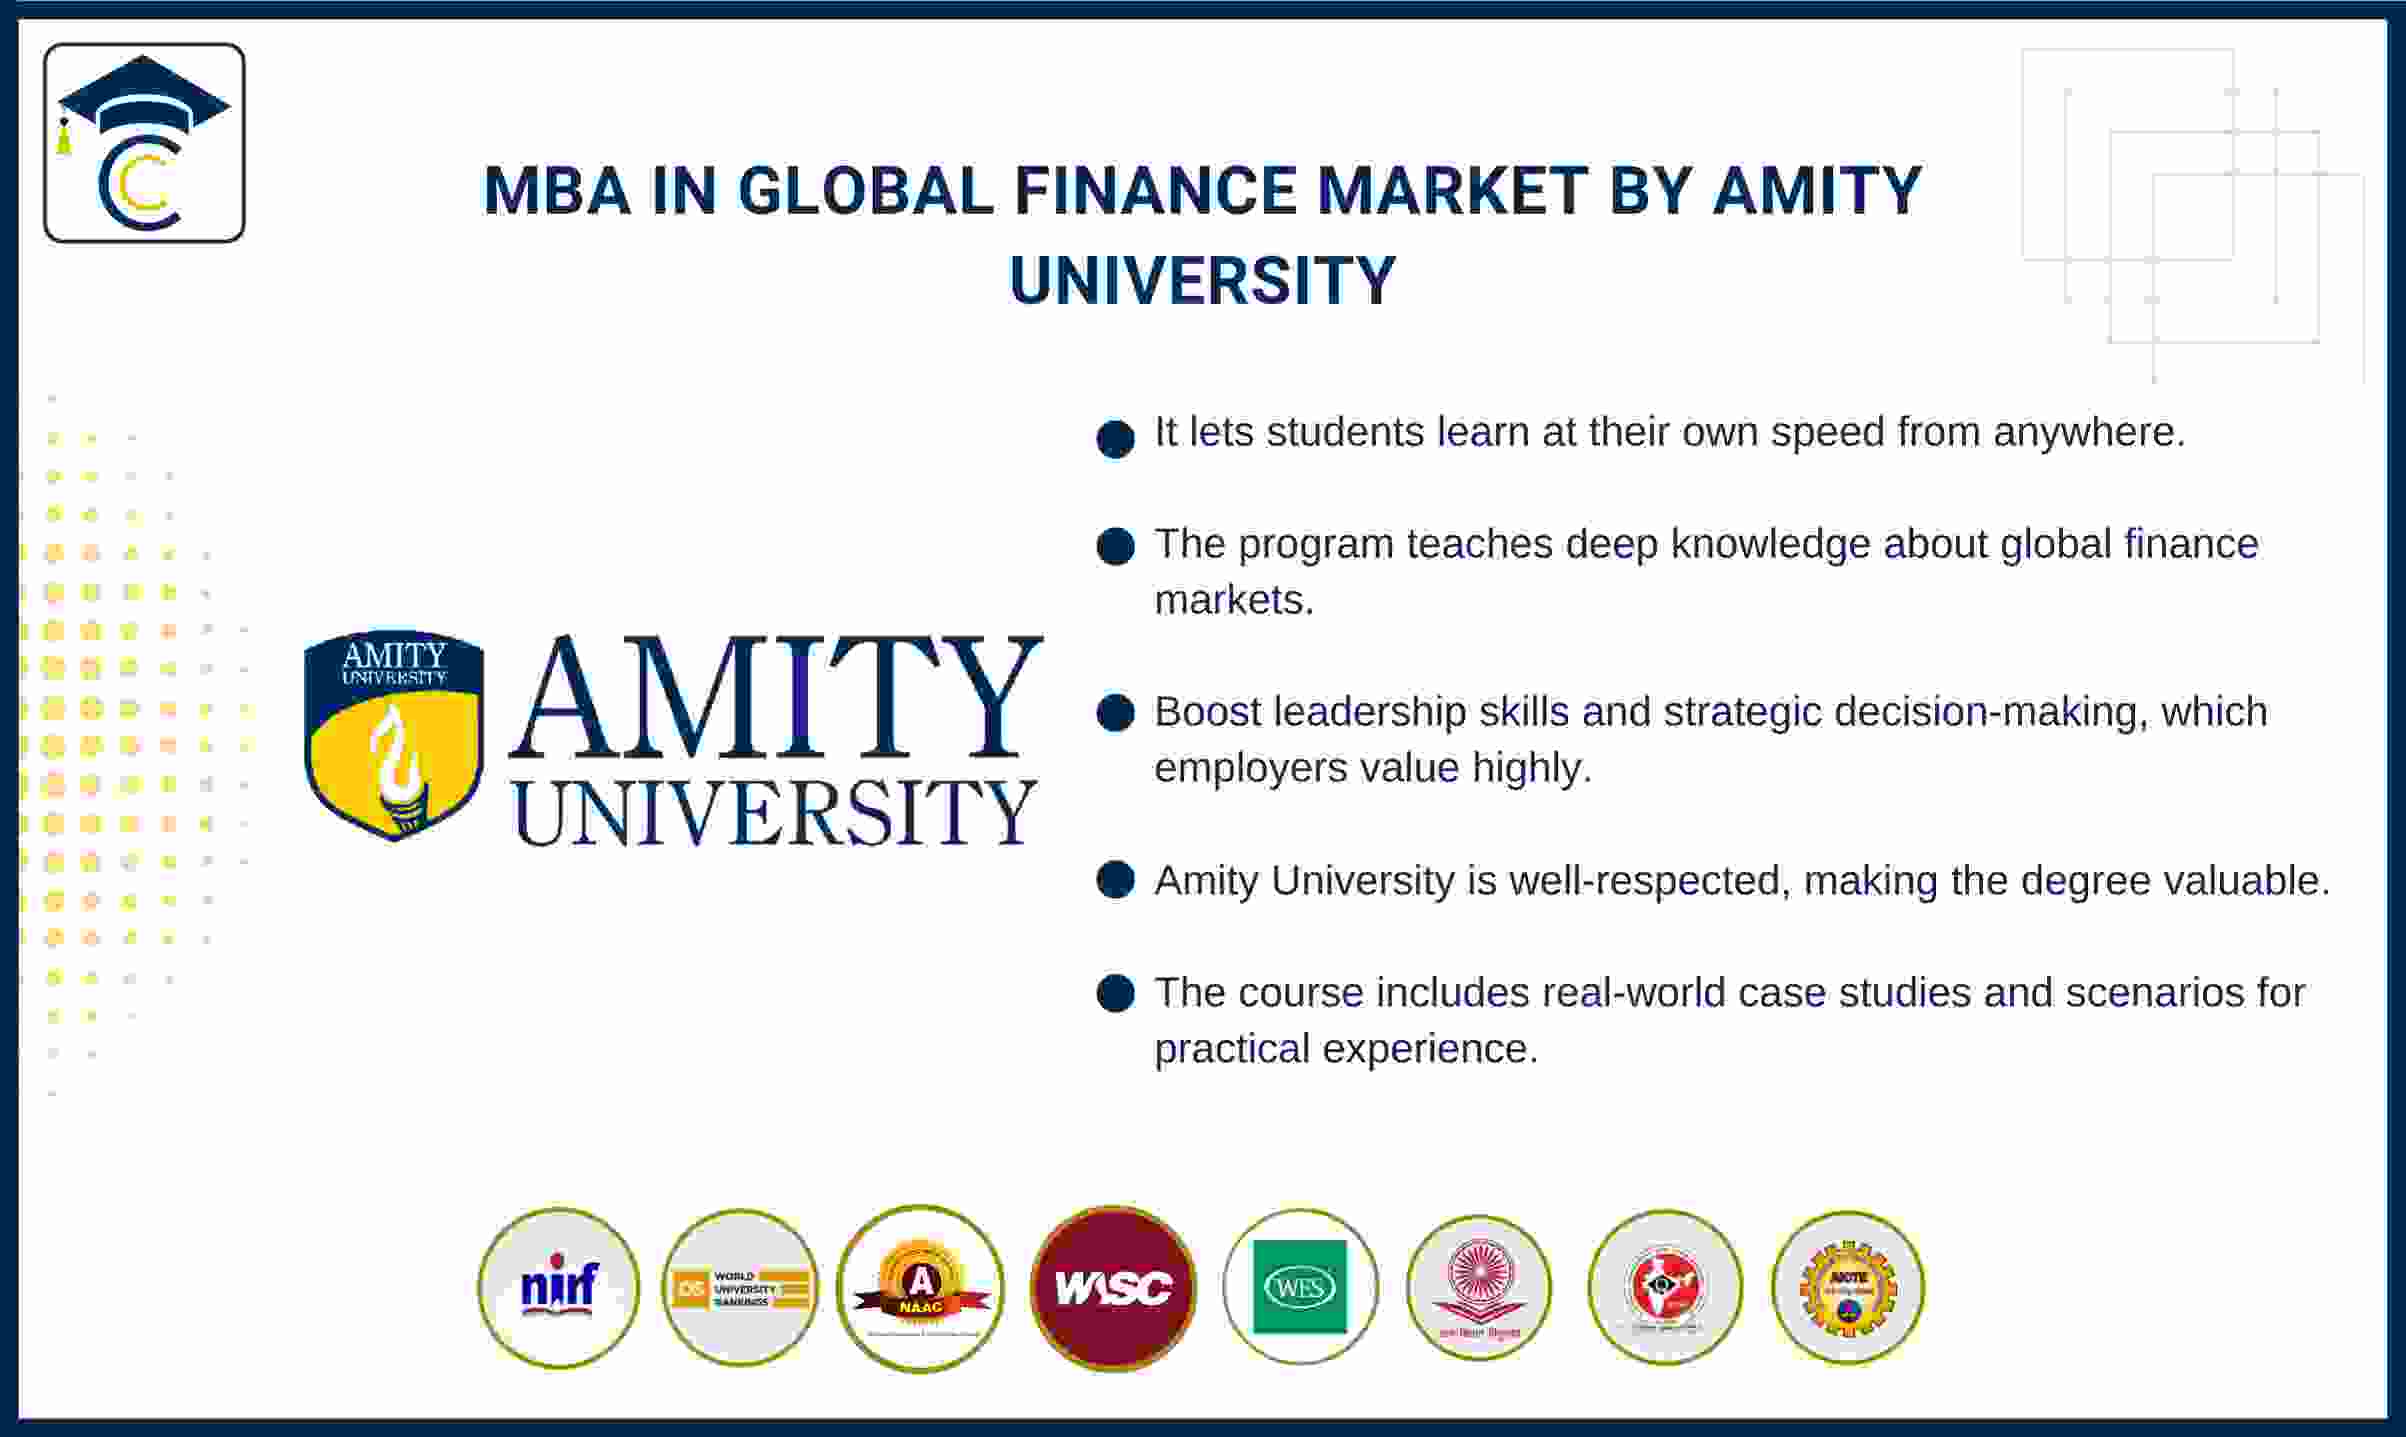 mba-in-global-finance-market-amity-university